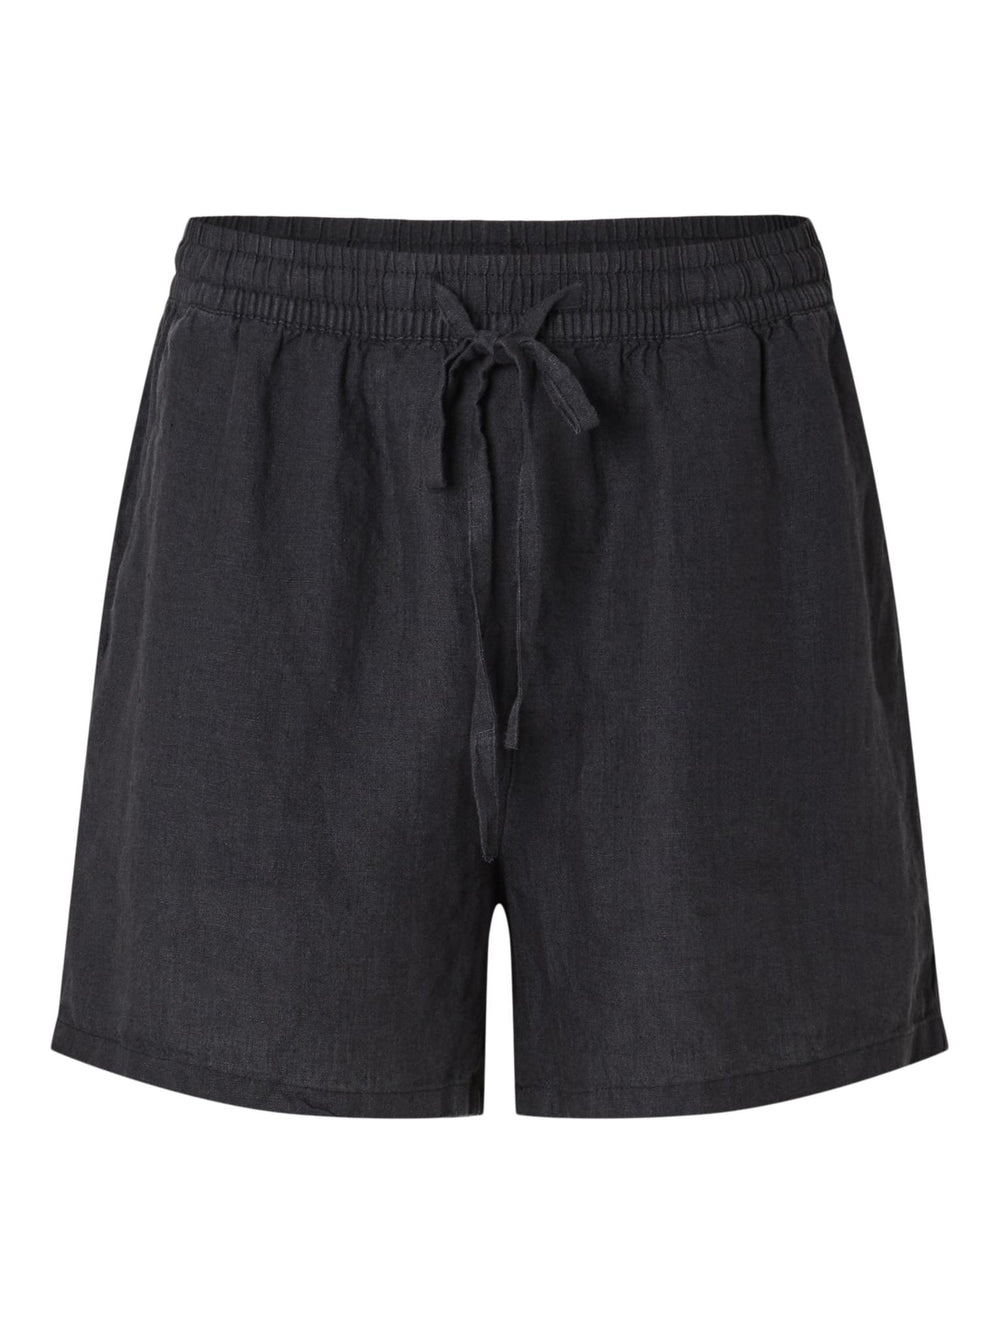 SLFLINNIE Black Linen Shorts